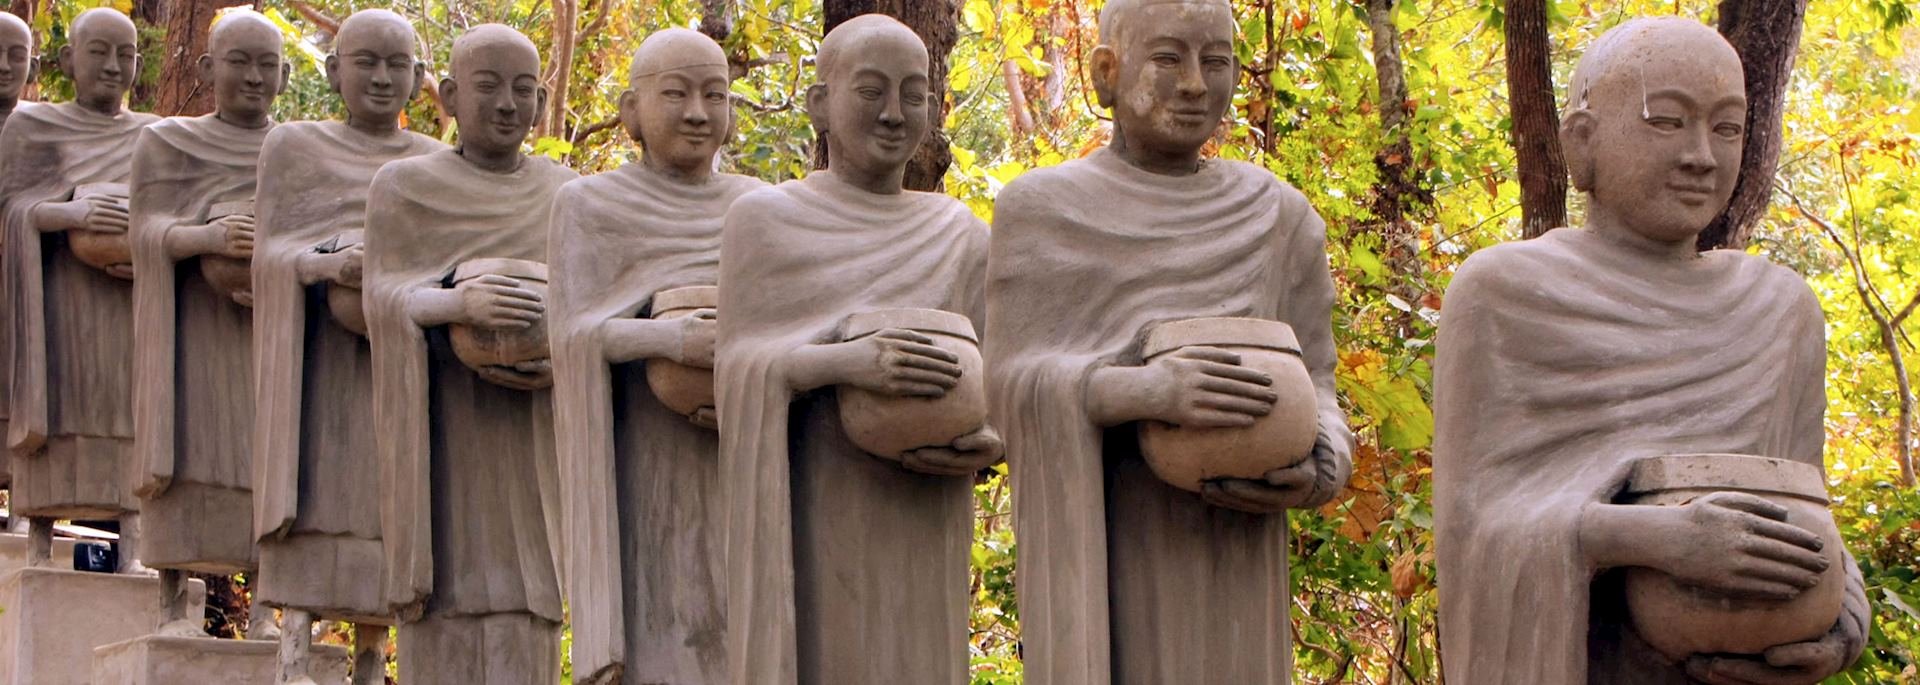 Buddha statues, Kratie